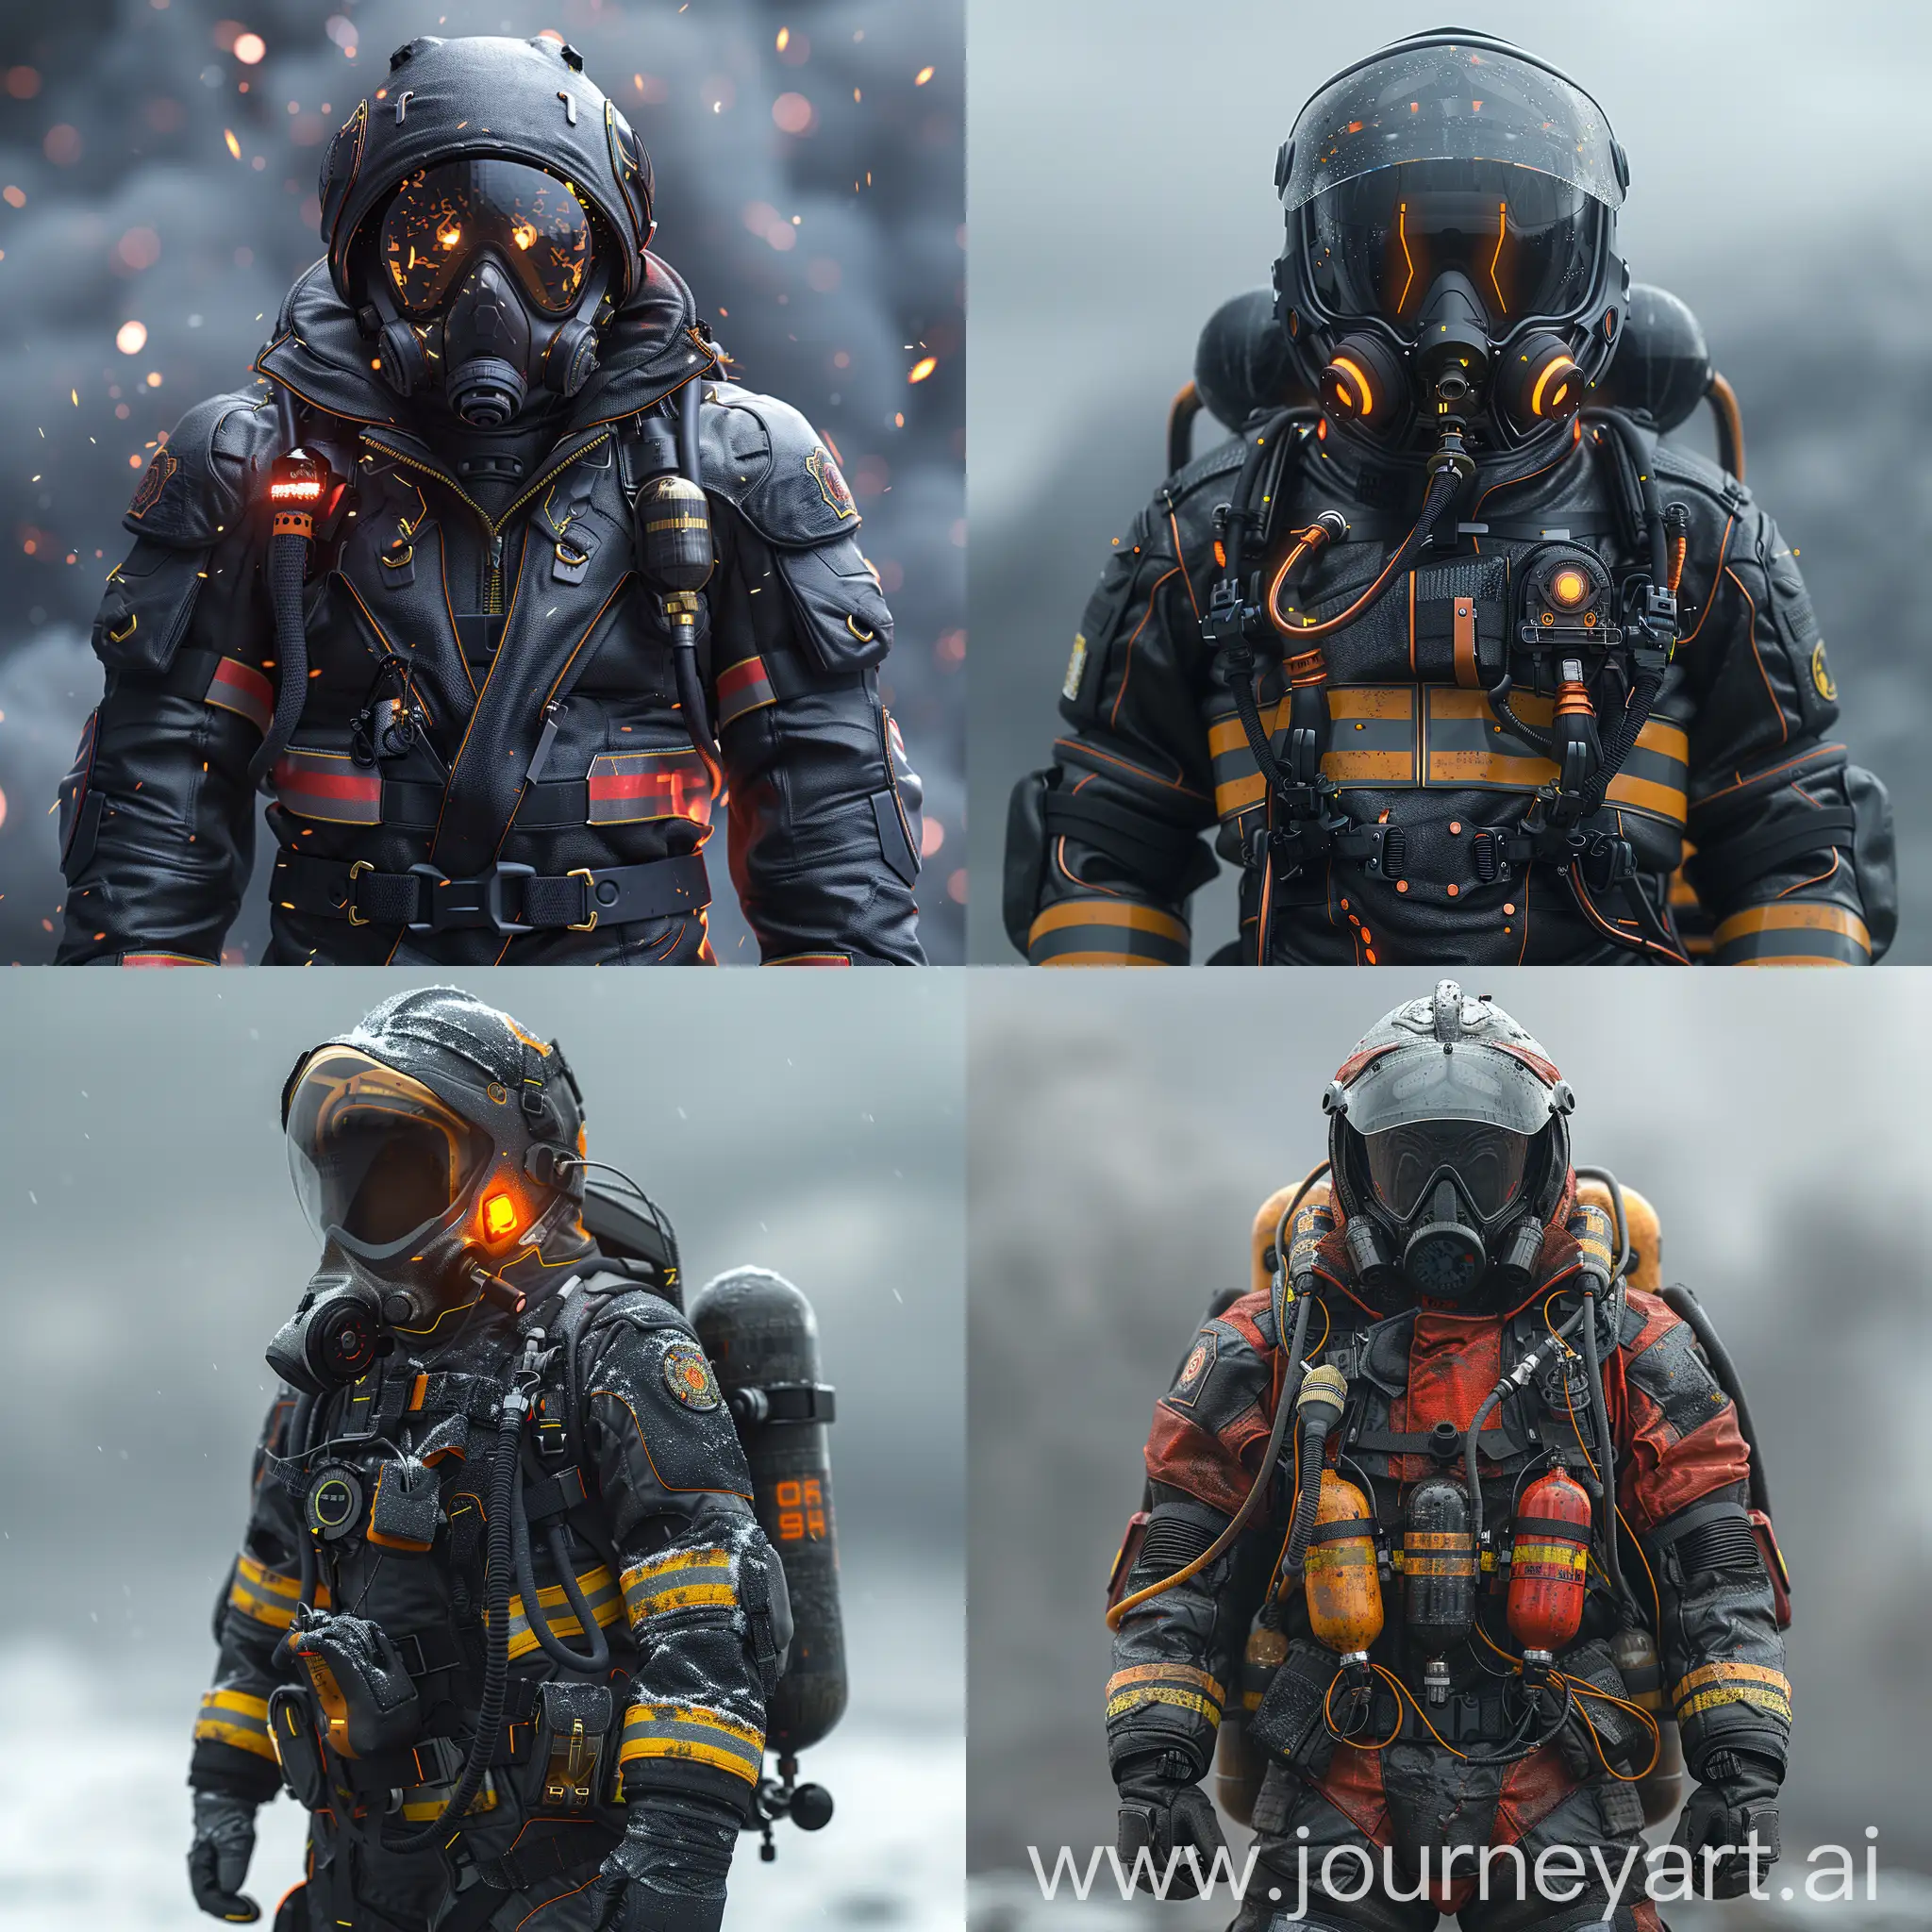 Futuristic-Firefighter-Suit-in-UltraModern-Setting